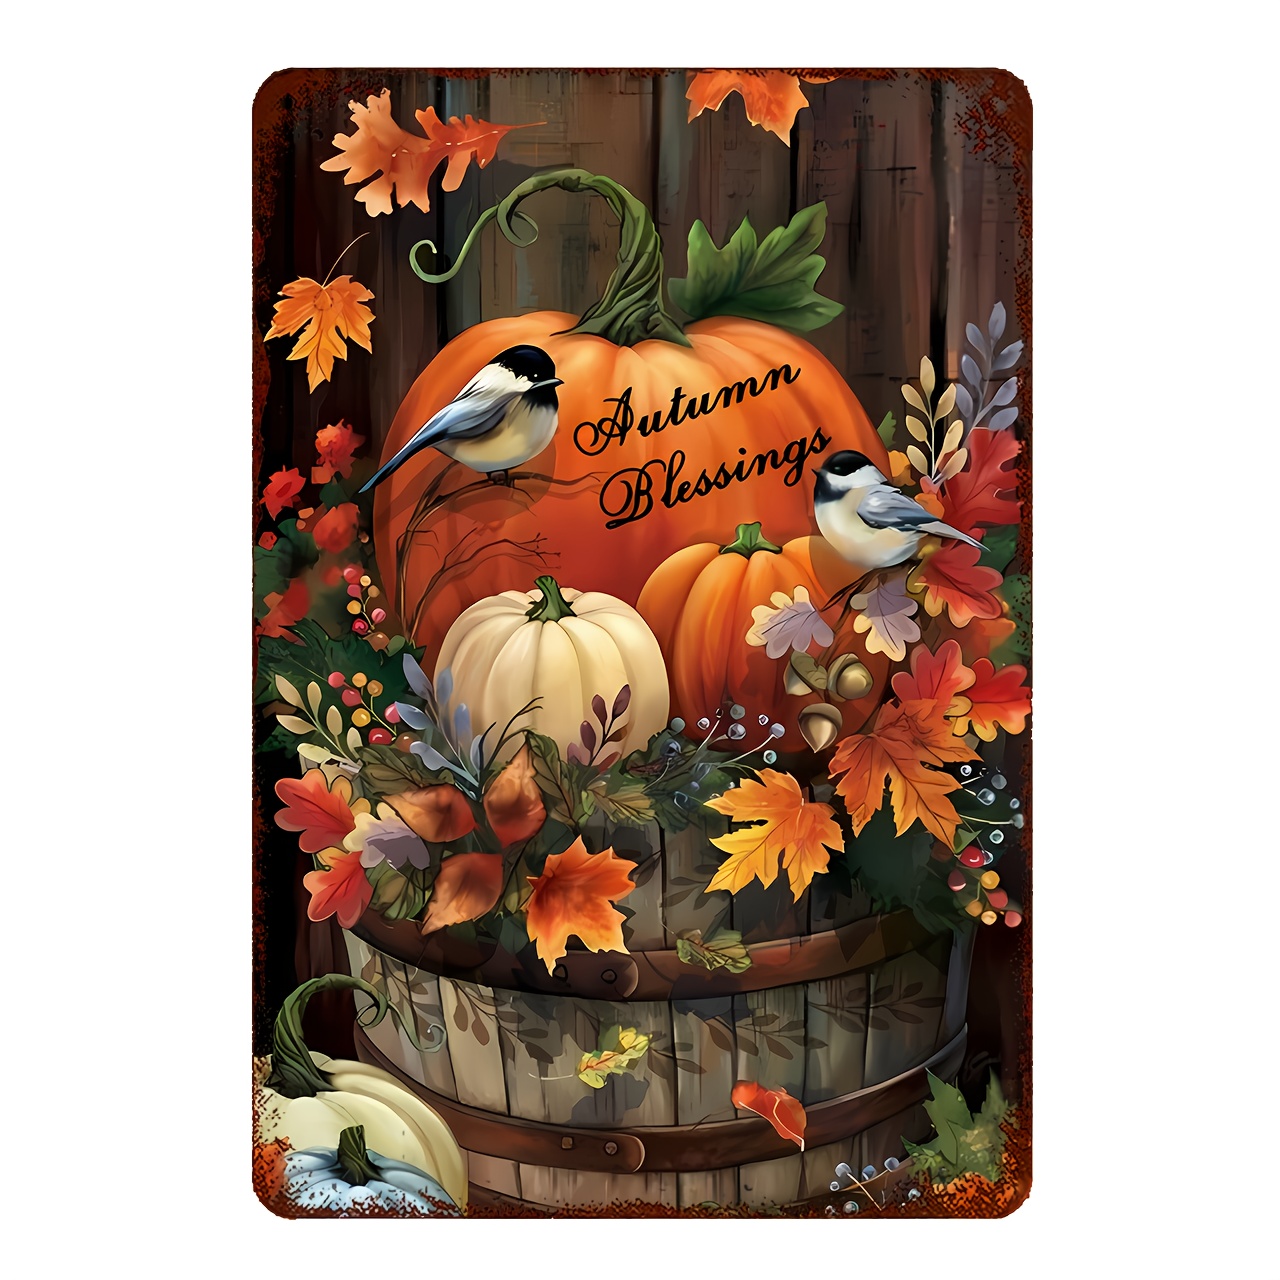 Happy Thanksgiving Pumpkin Embroidery Design